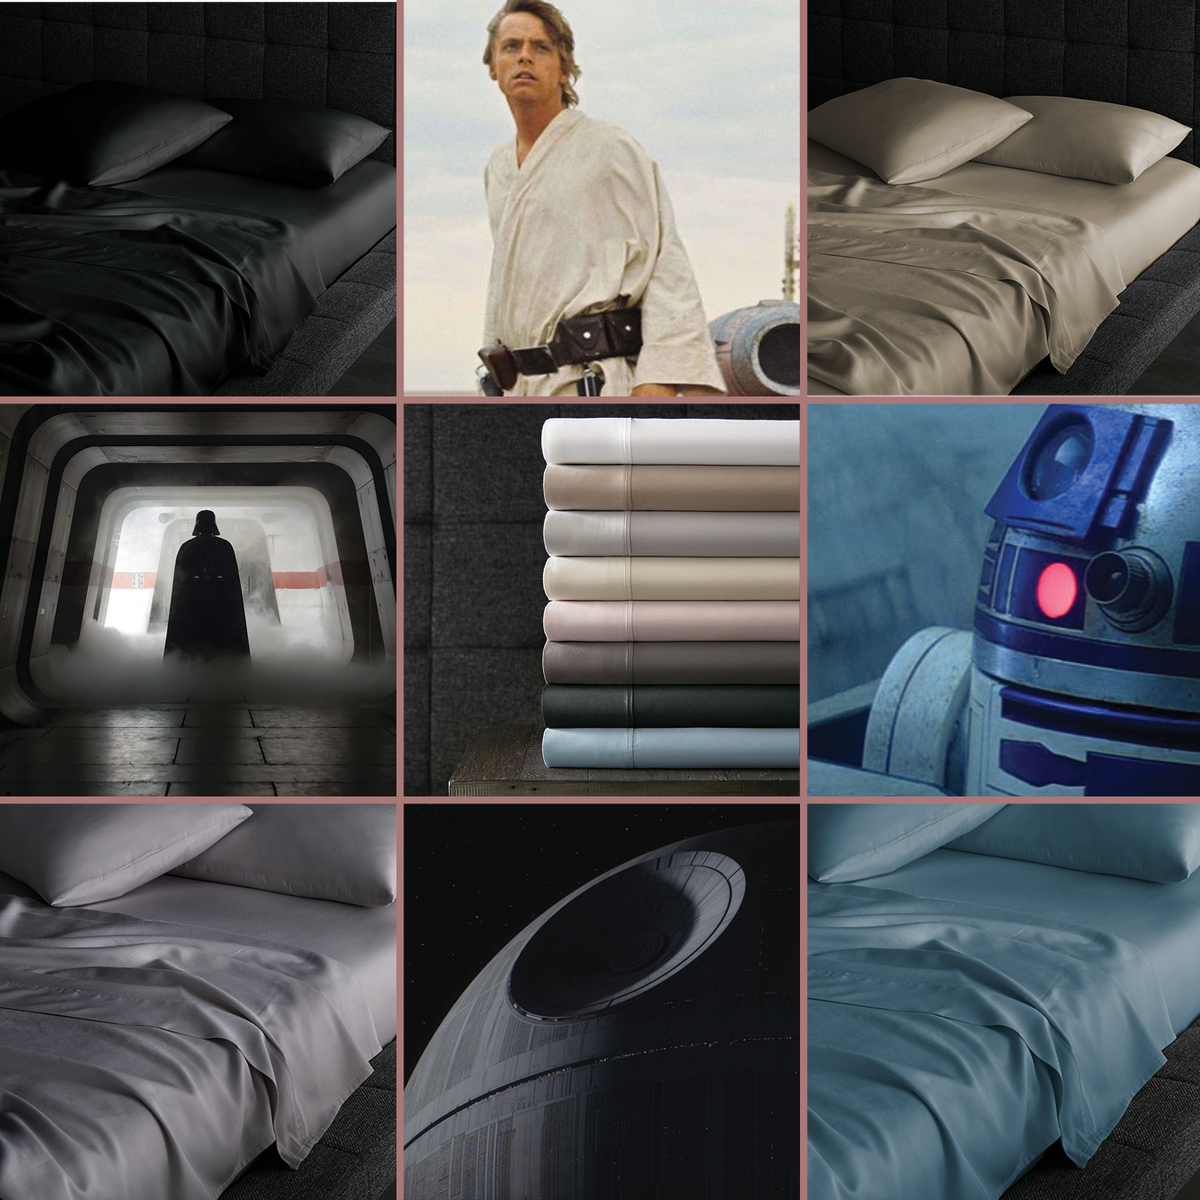 Sobel Westex Dark Side Star Wars 7pc Bedding Collection - Hotel Quality, Darth Vader Inspired Design, King